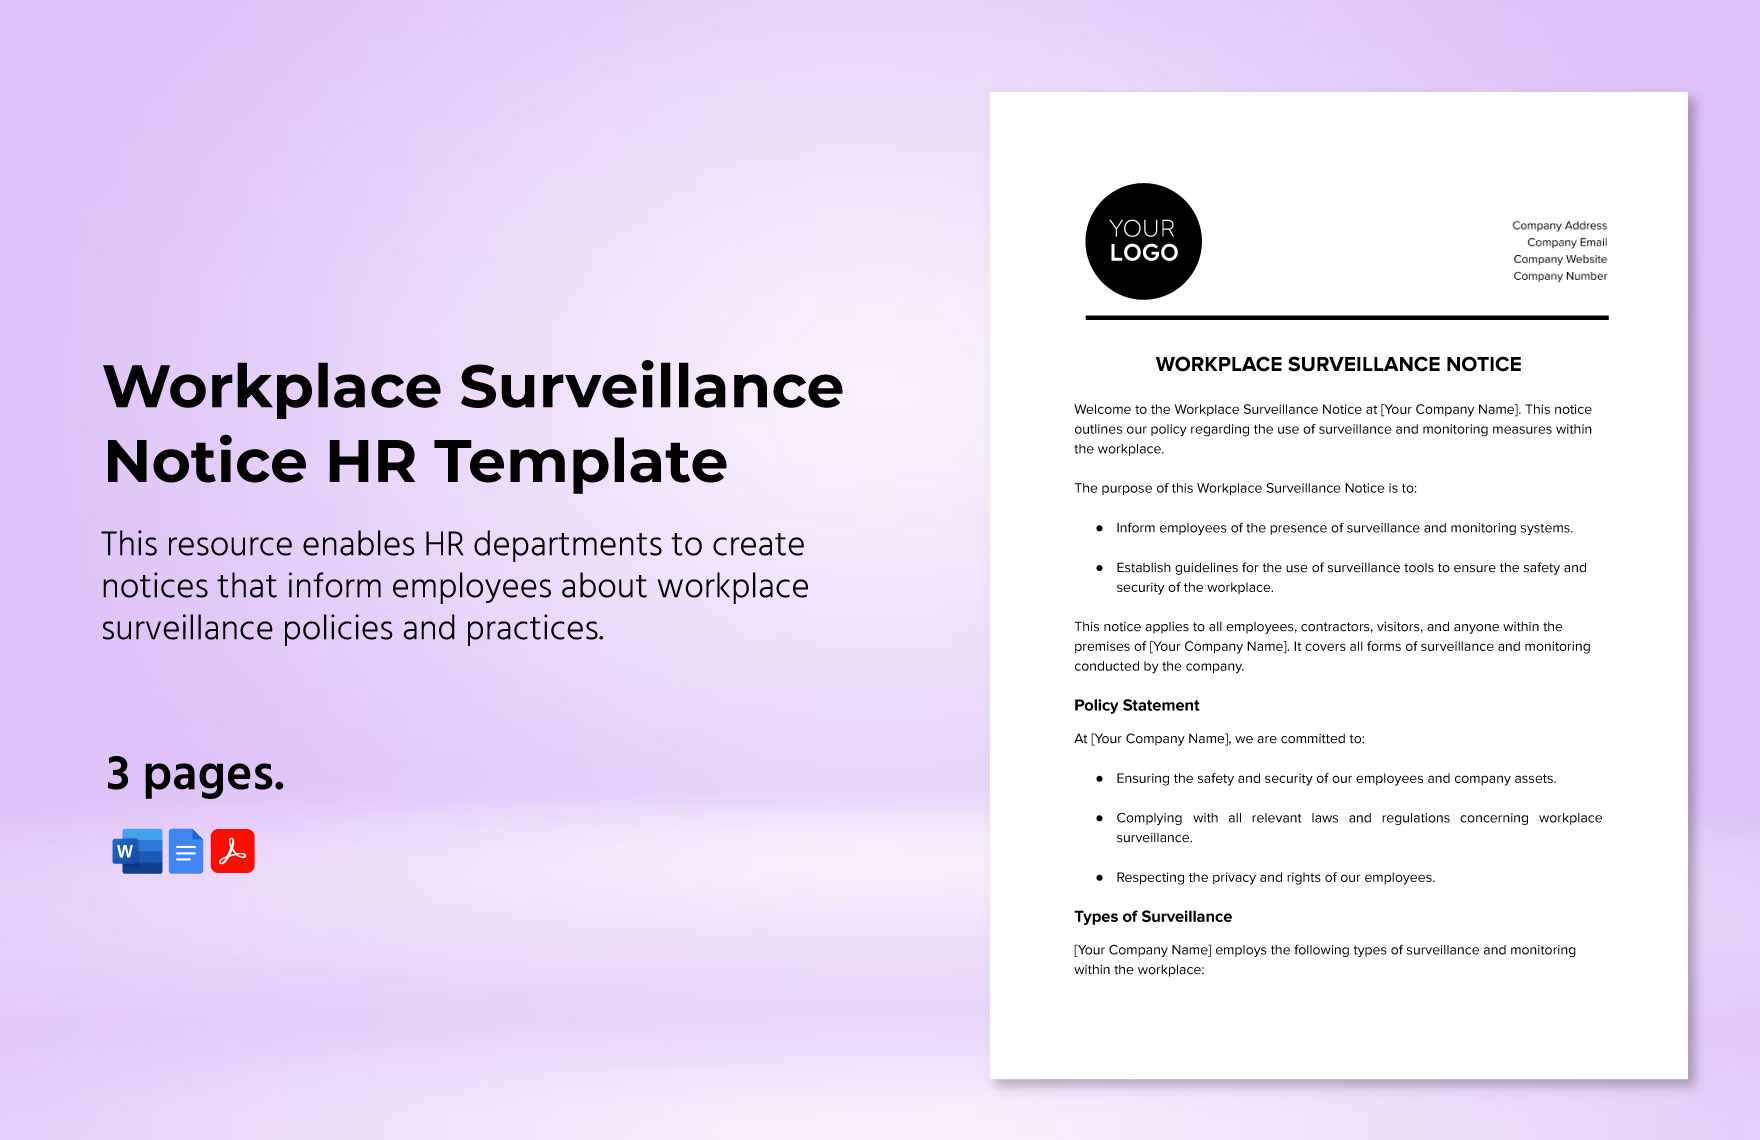 Workplace Surveillance Notice HR Template